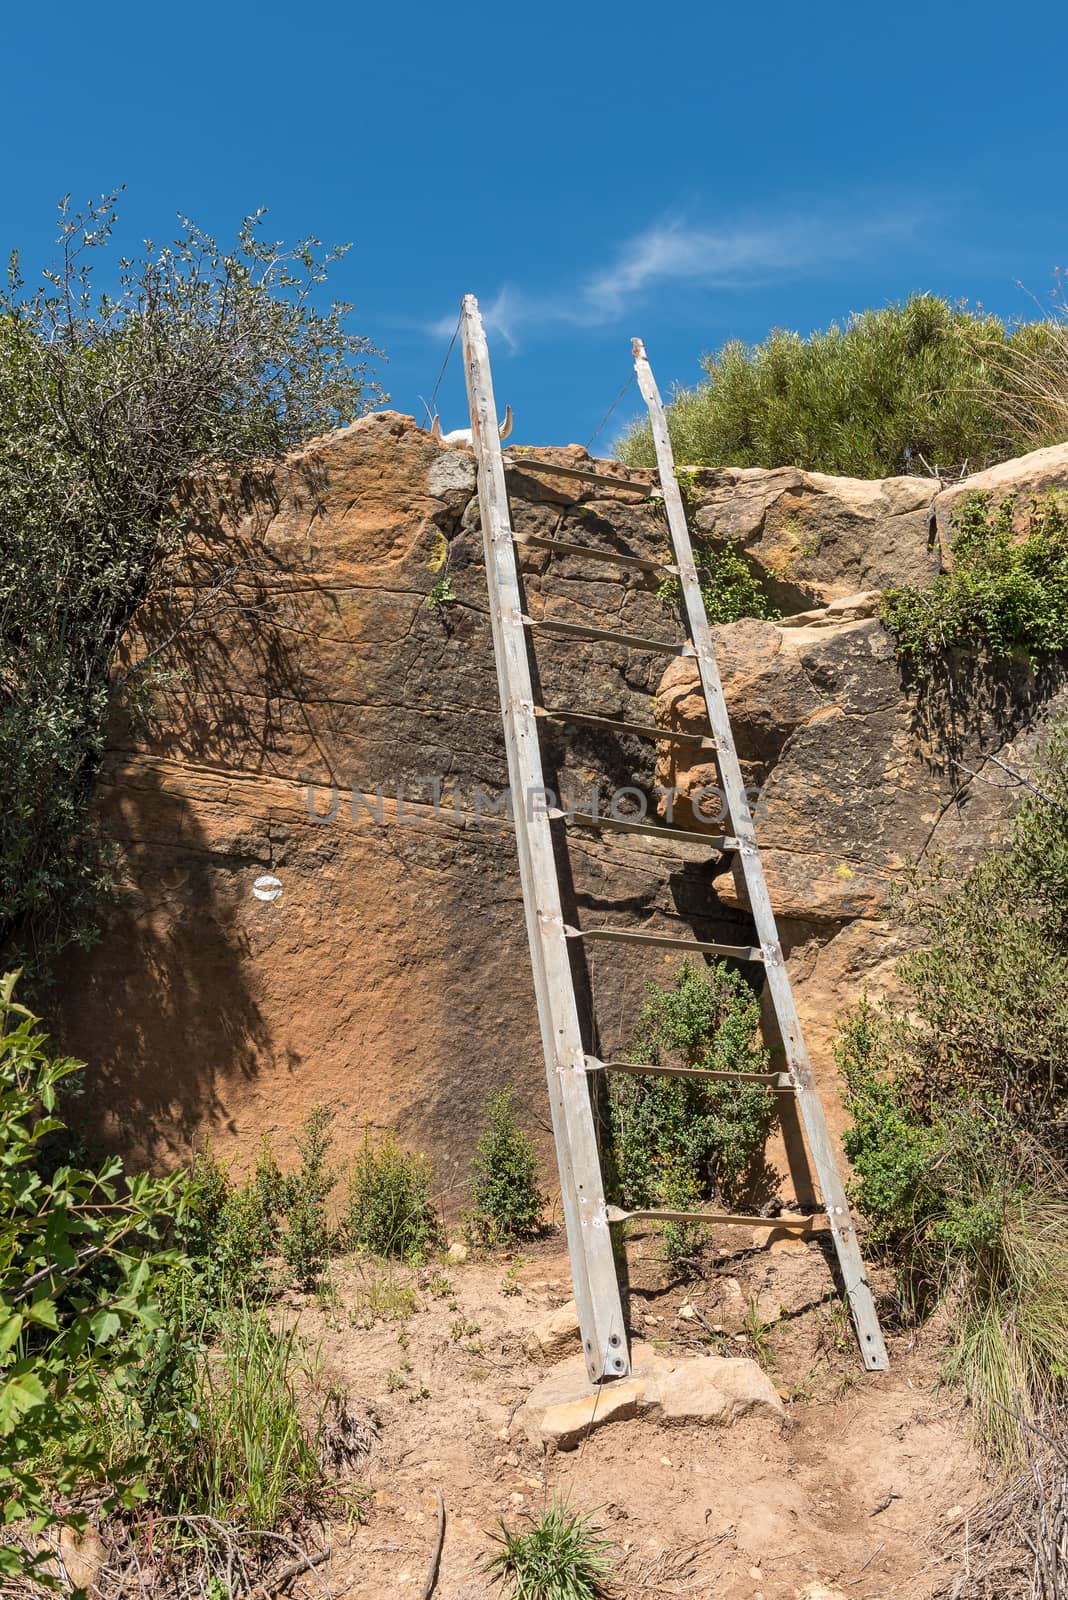 Ladder on the Eland Hiking Trail at Eingedi by dpreezg